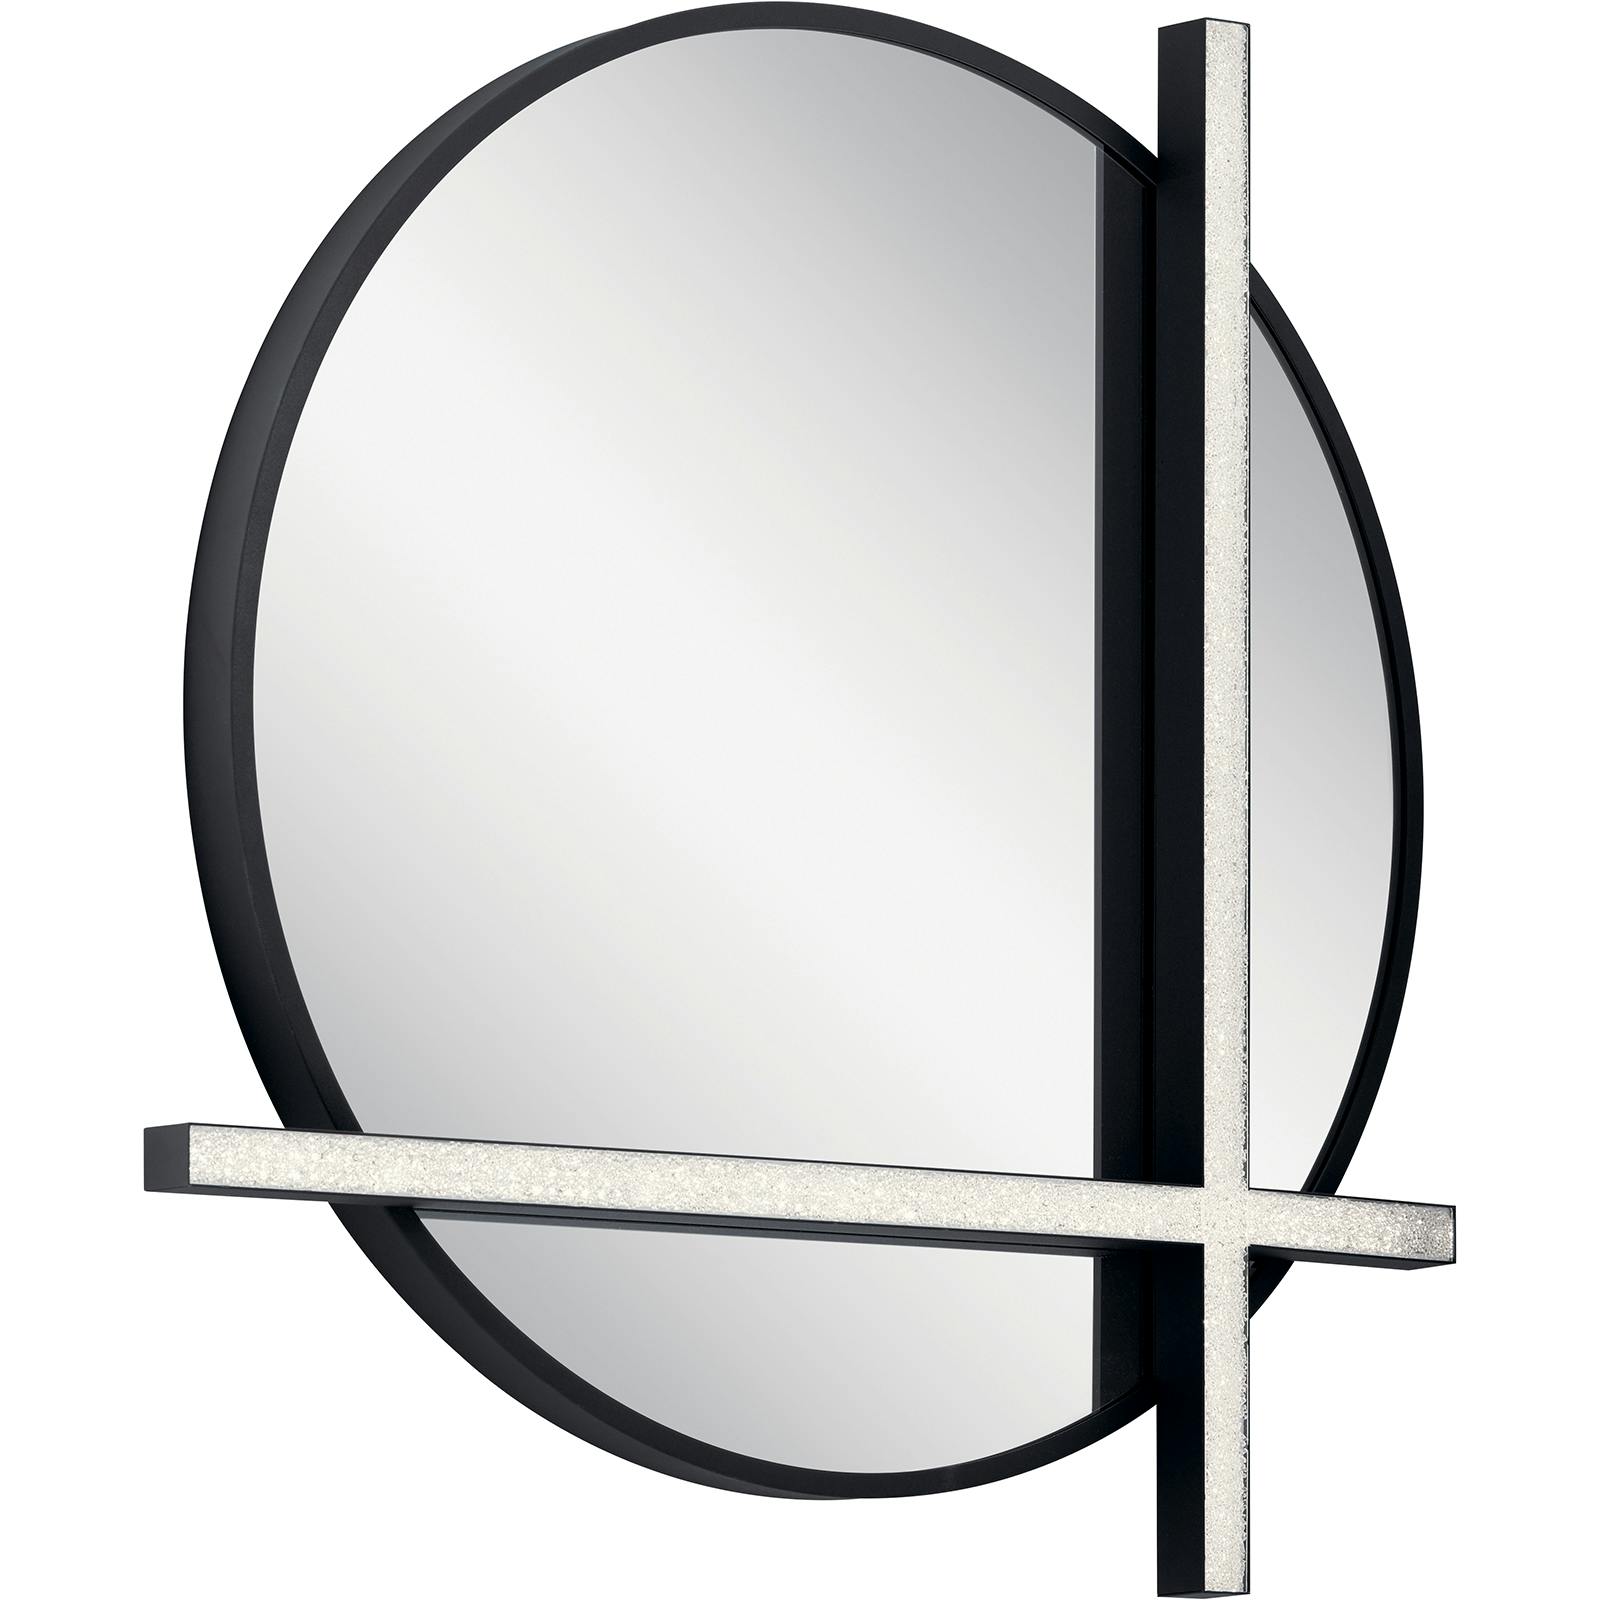 Kemena™ LED Lighted Mirror Matte Black on a white background